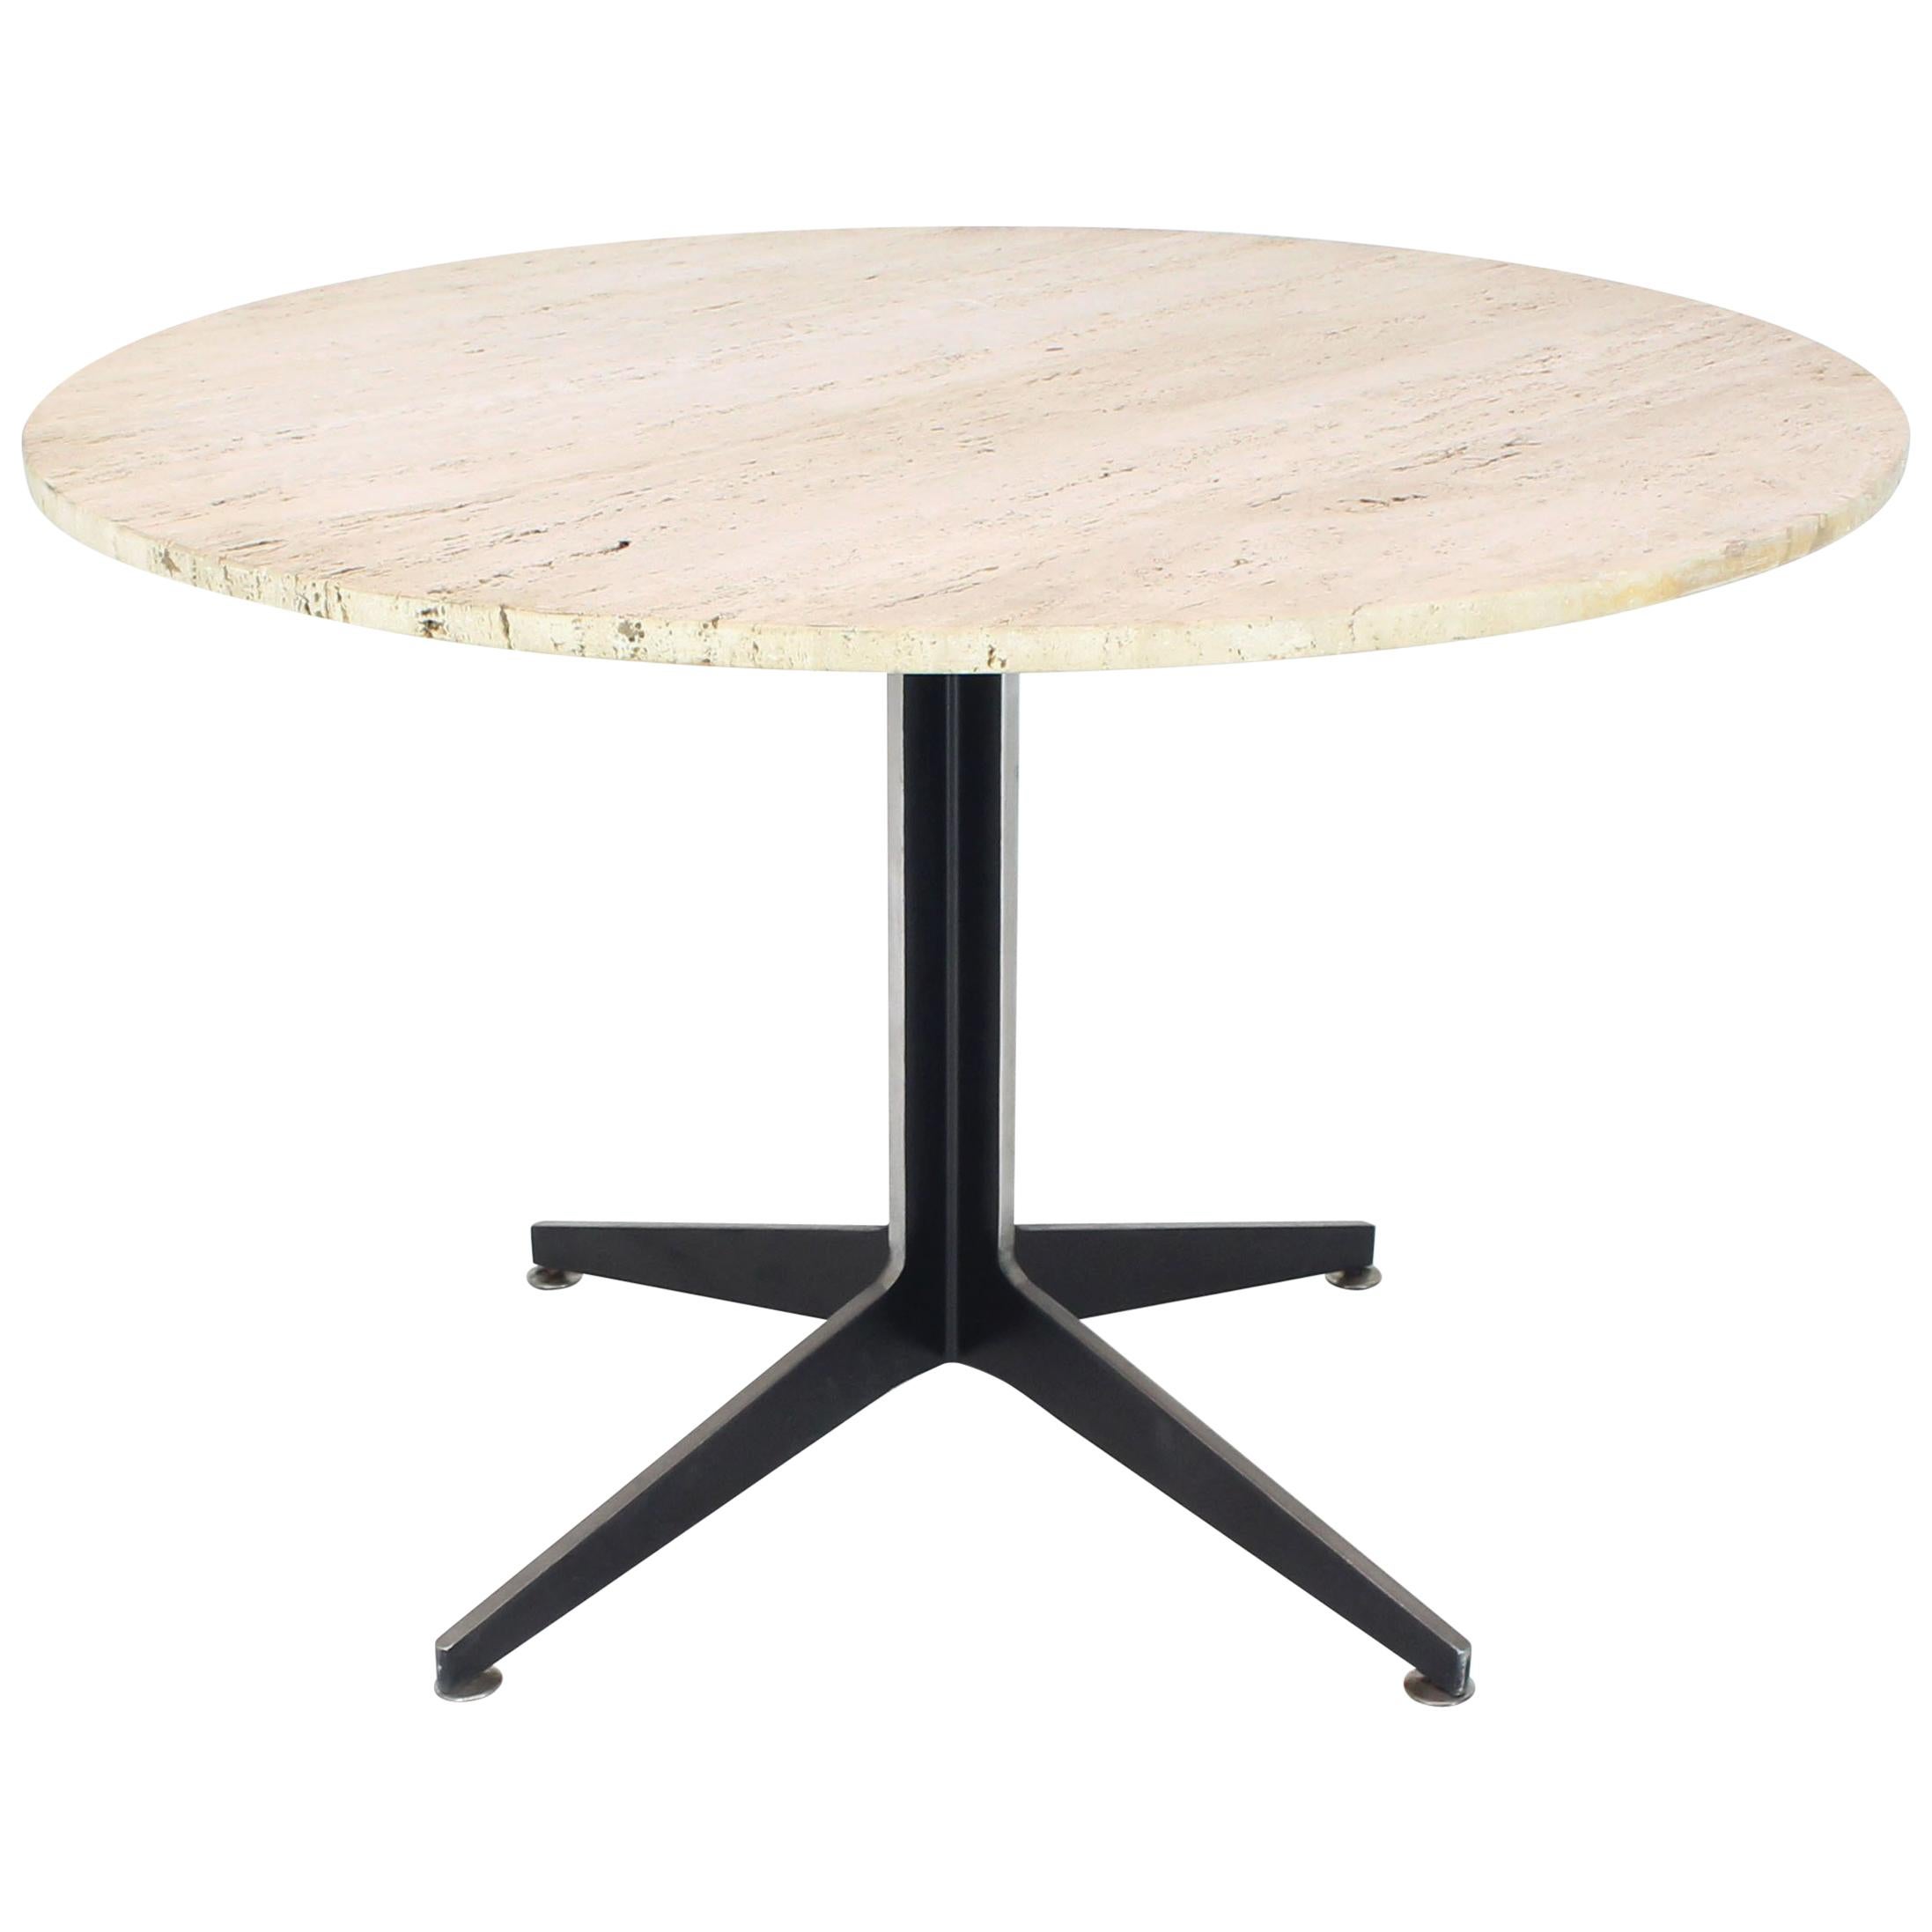 Round Travertine Top Fabricated Aluminium X-Base Cafe Dining Table